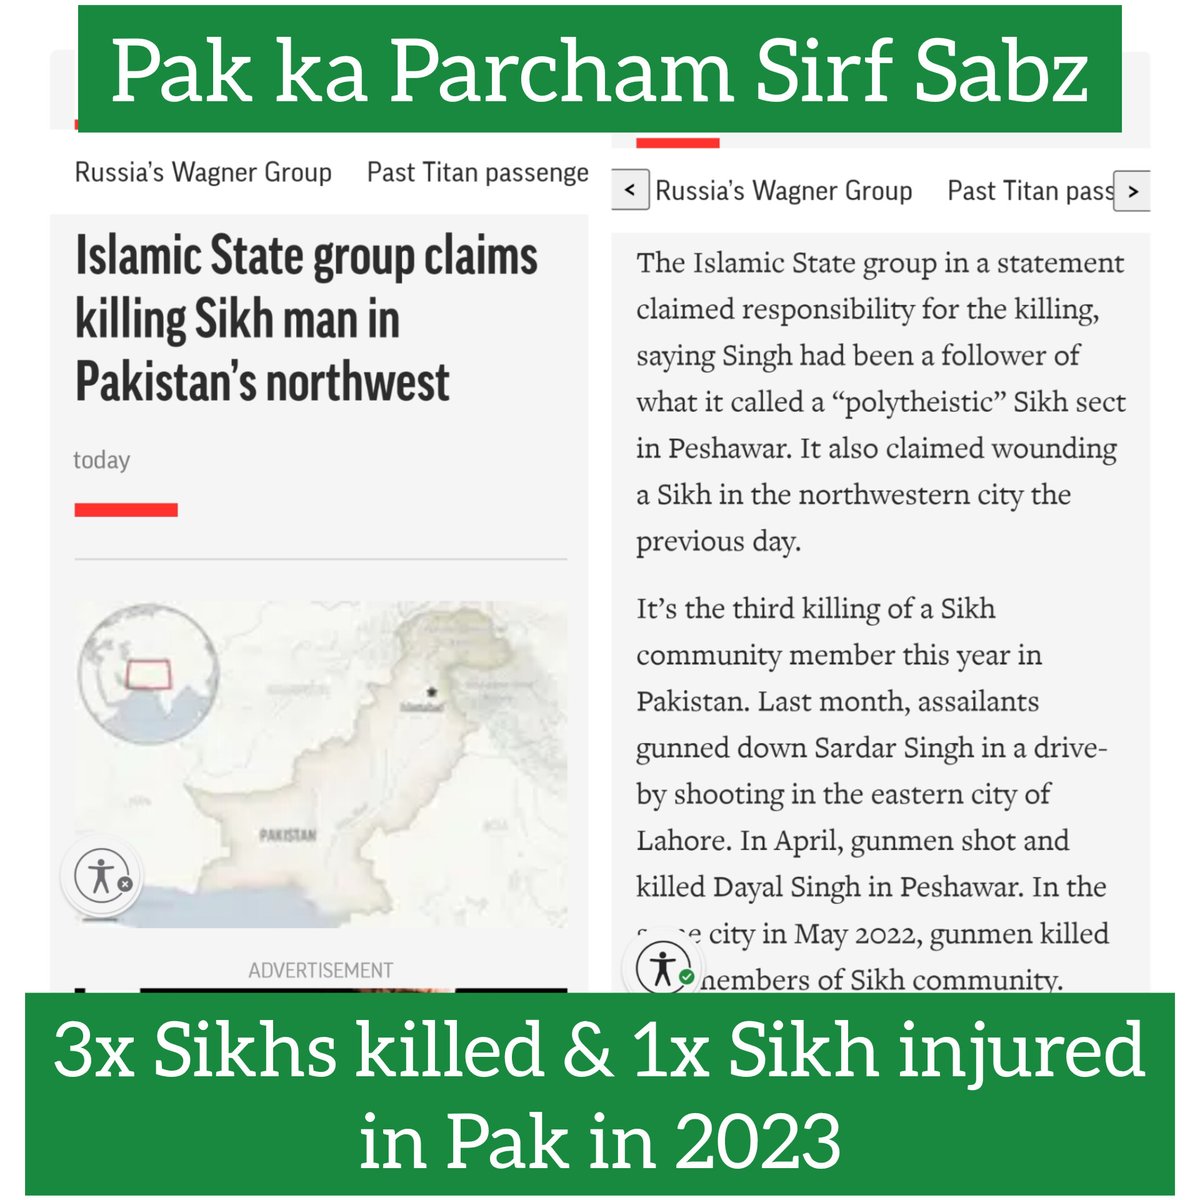 #PakKaParchamSirfSabz 
3x #Sikhs kiled & 1x #Sikh injured in #Pakistan in 2023.
#SanctionPakistan @USCIRF
#BlackListPakistan @EU_Commission
Do see @MEAIndia @AdityaRajKaul @rsrobin1 @JavedBeigh @MikaSingh
Link
apnews.com/article/pakist…